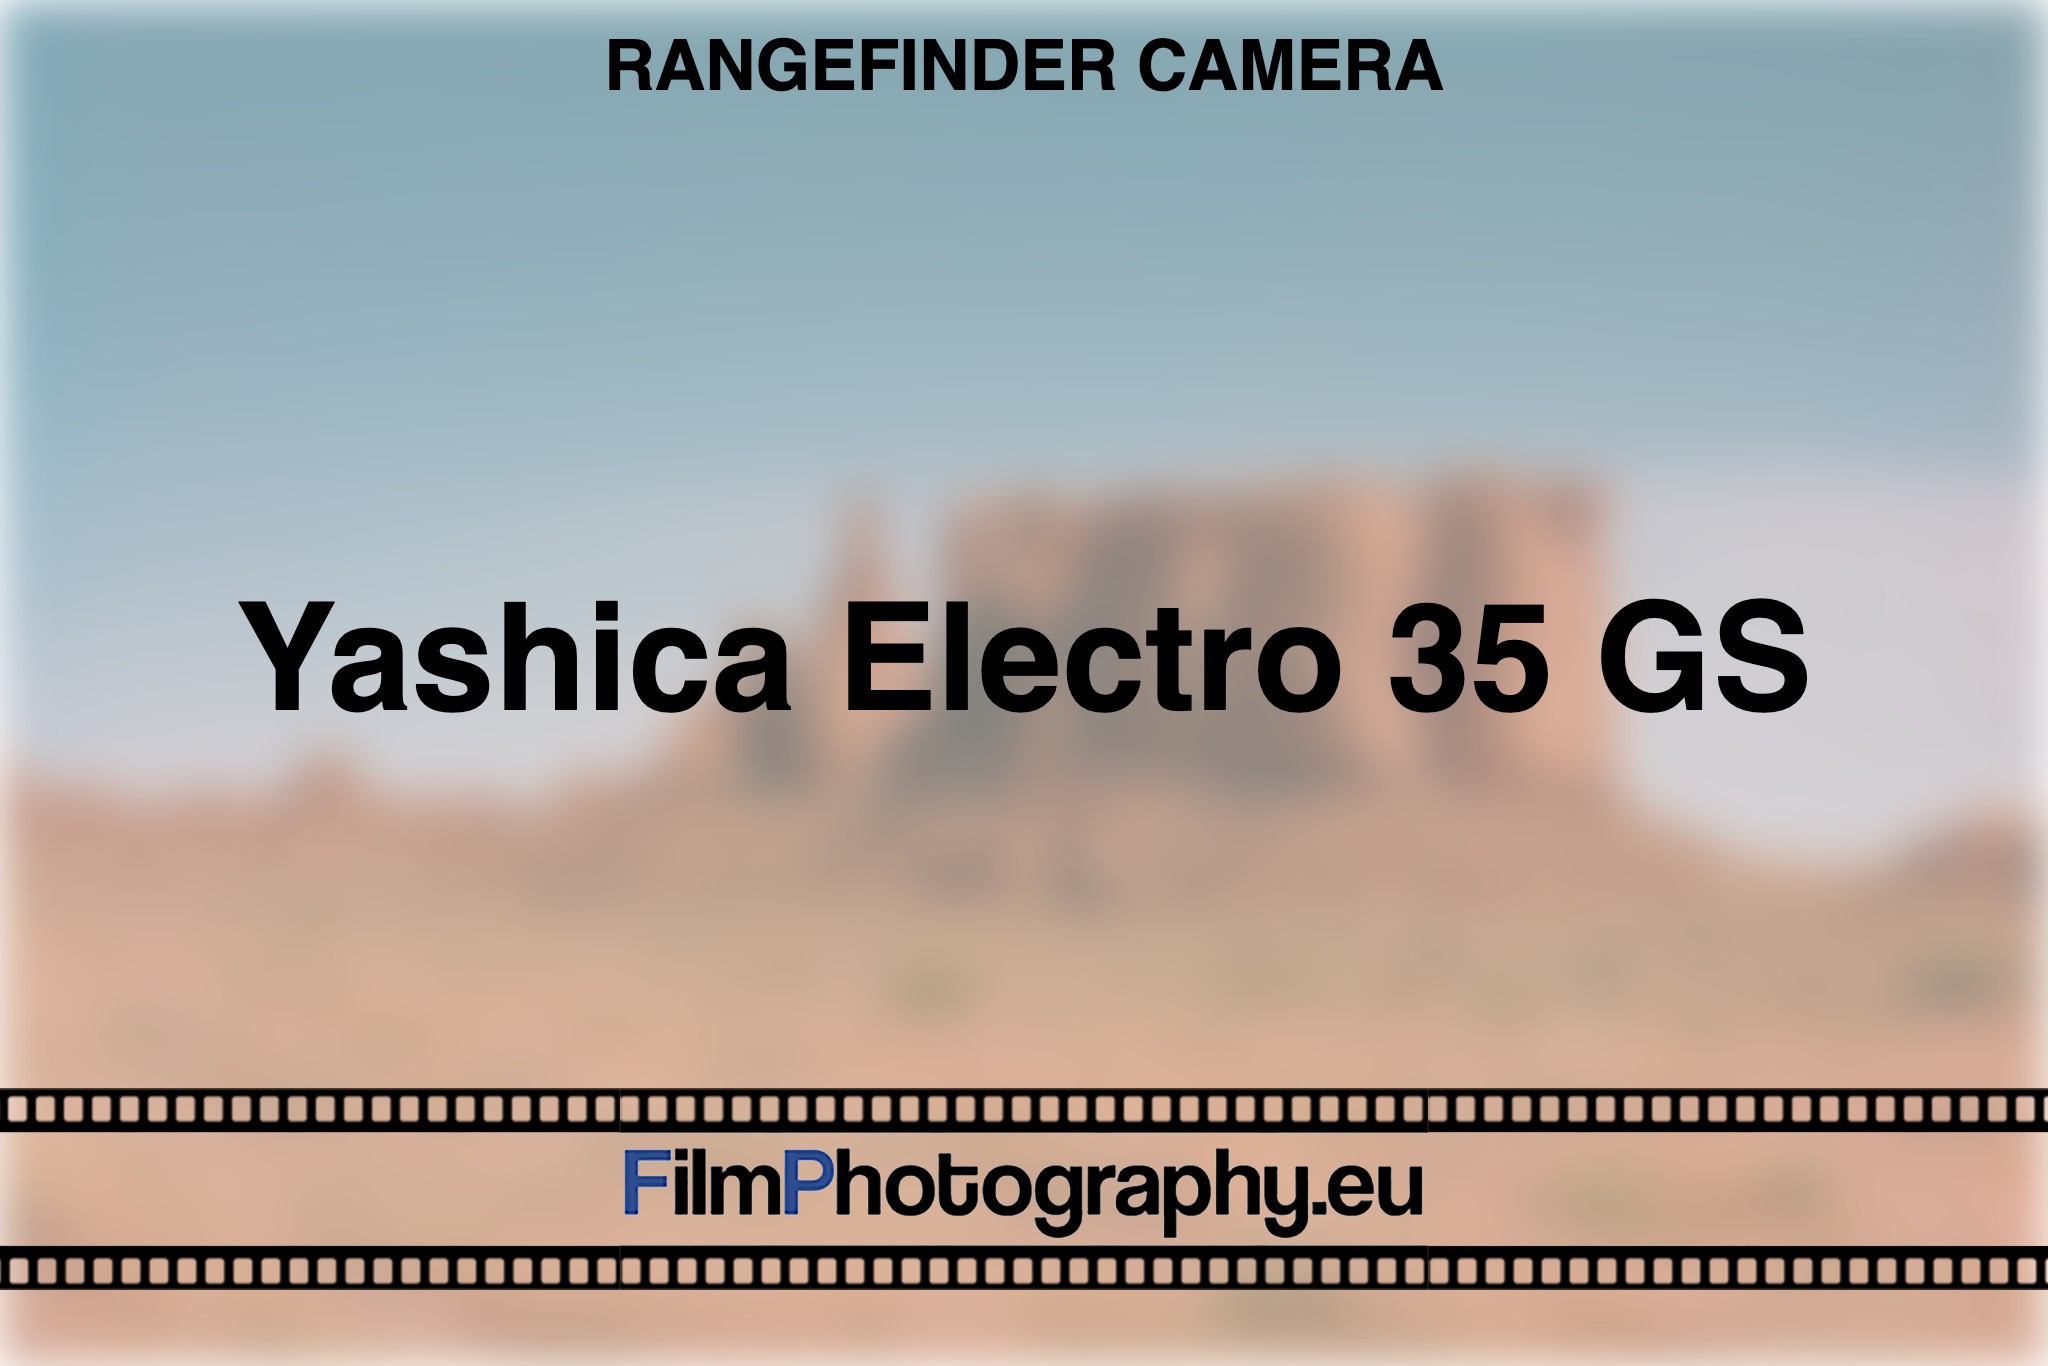 yashica-electro-35-gs-rangefinder-camera-bnv